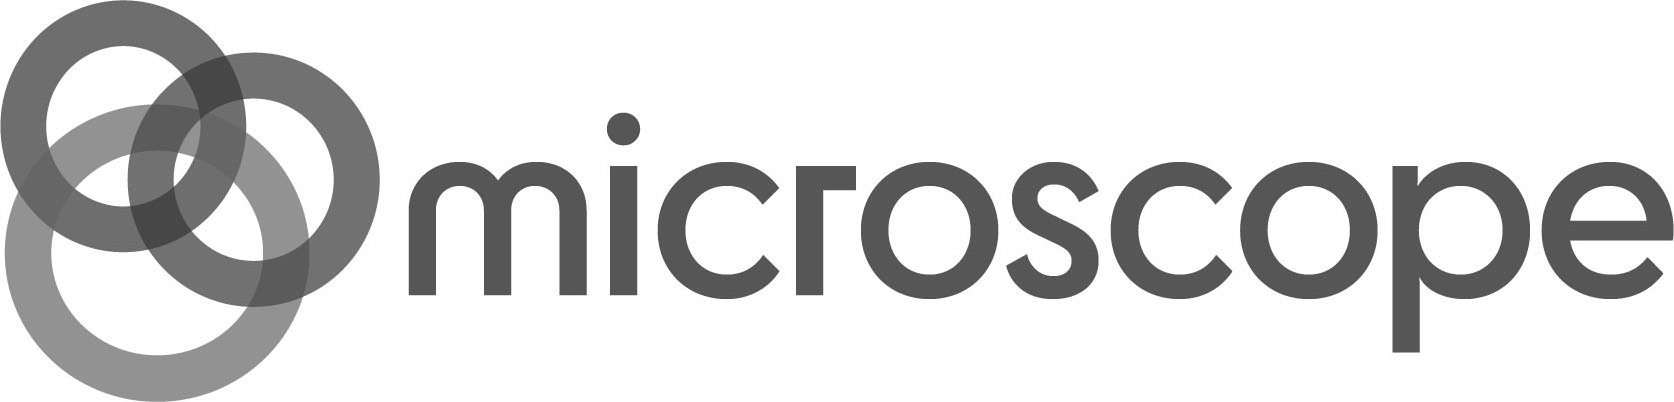 Trademark Logo MICROSCOPE